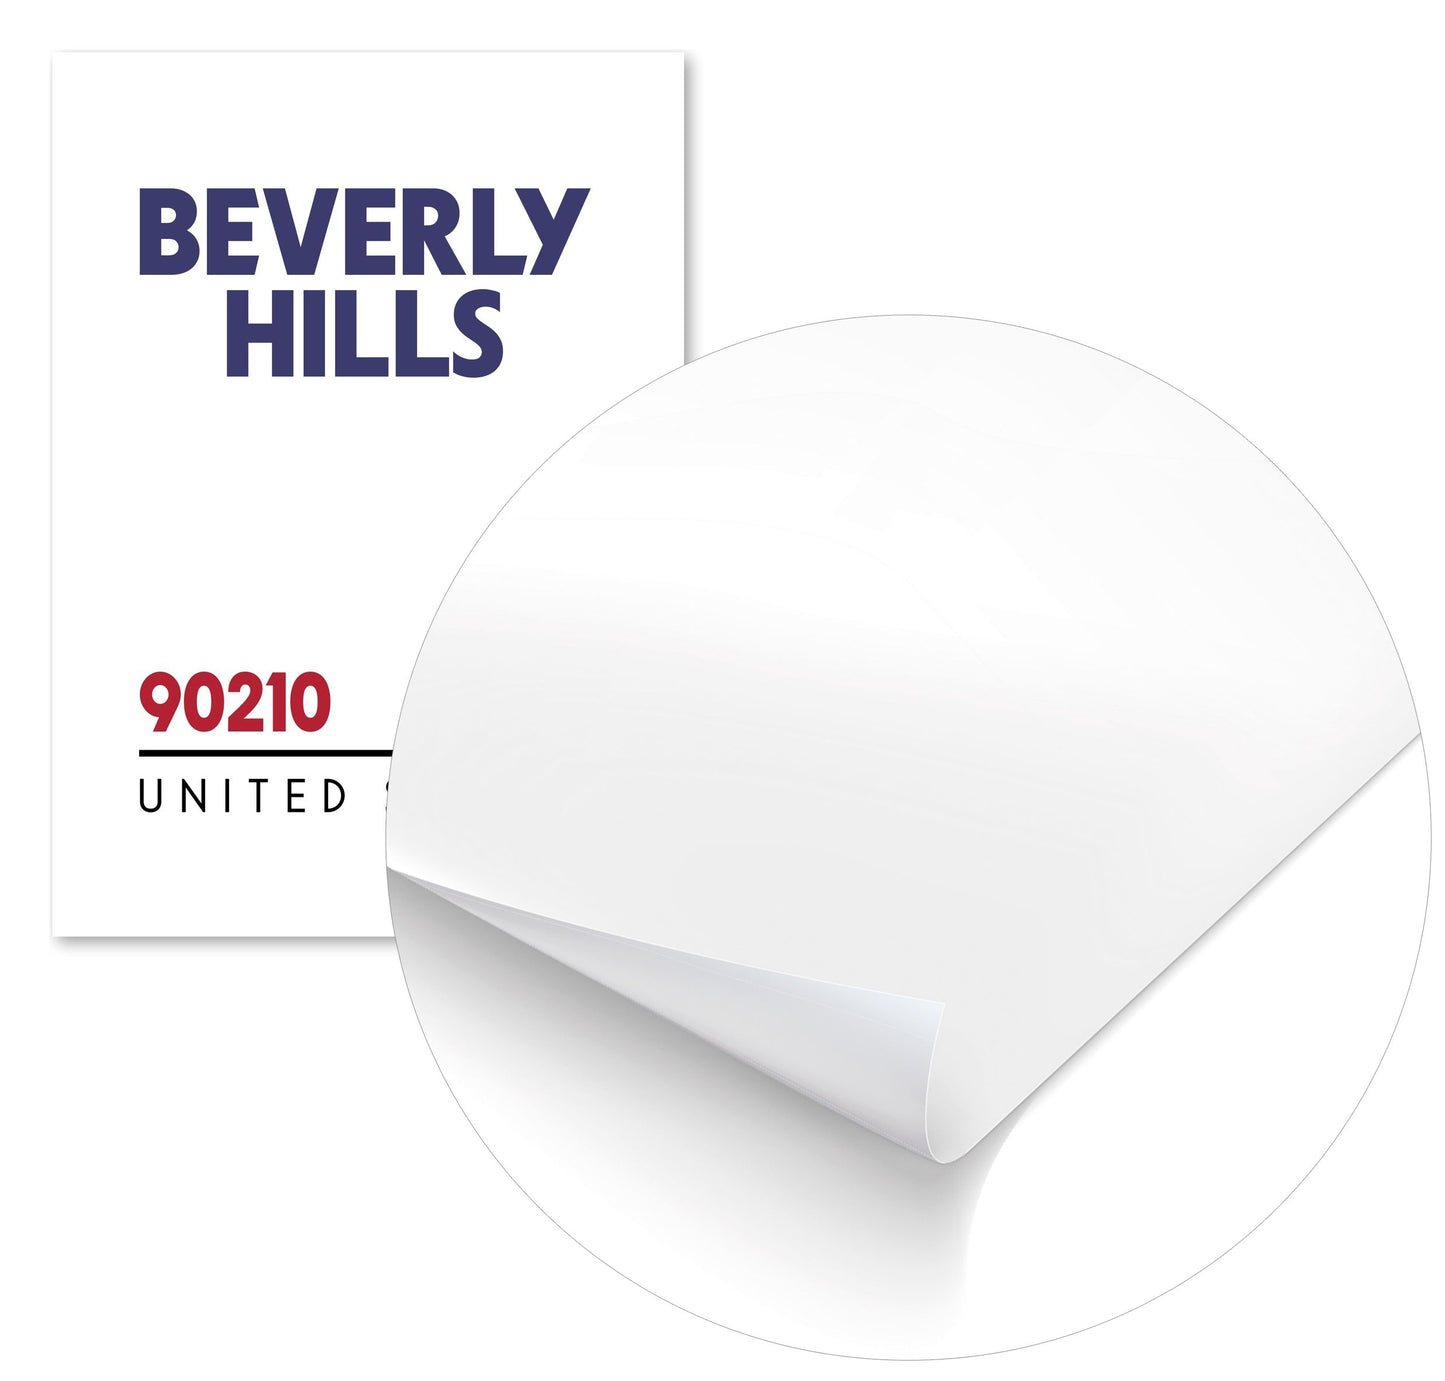 Beverly 90210 Postal Code - @VickyHanggara